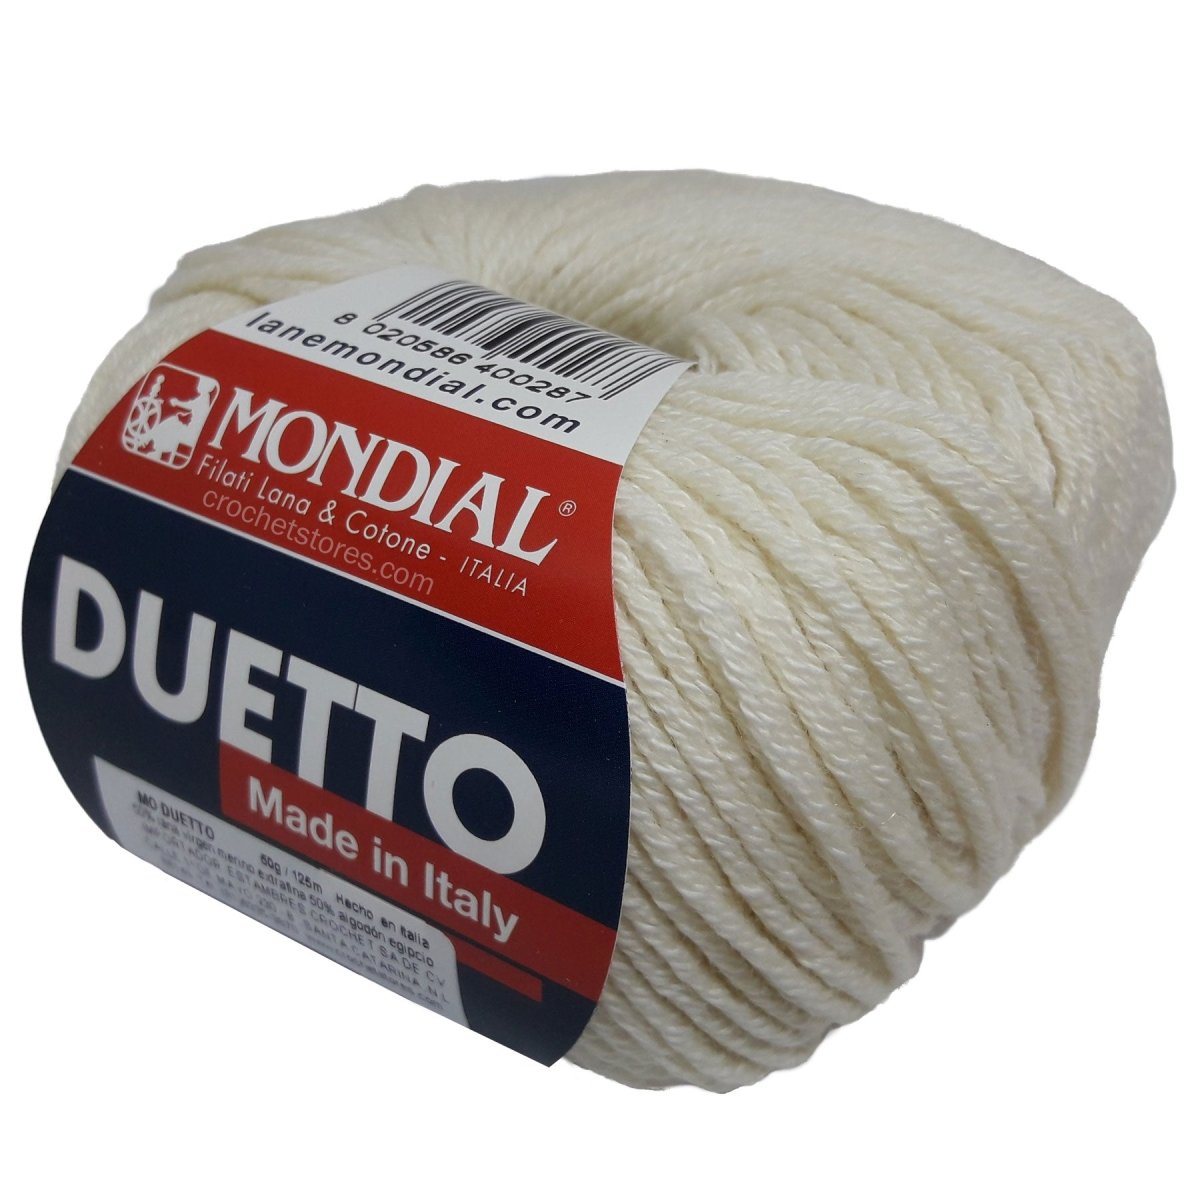 DUETTO - Crochetstores1175-4268020586400287